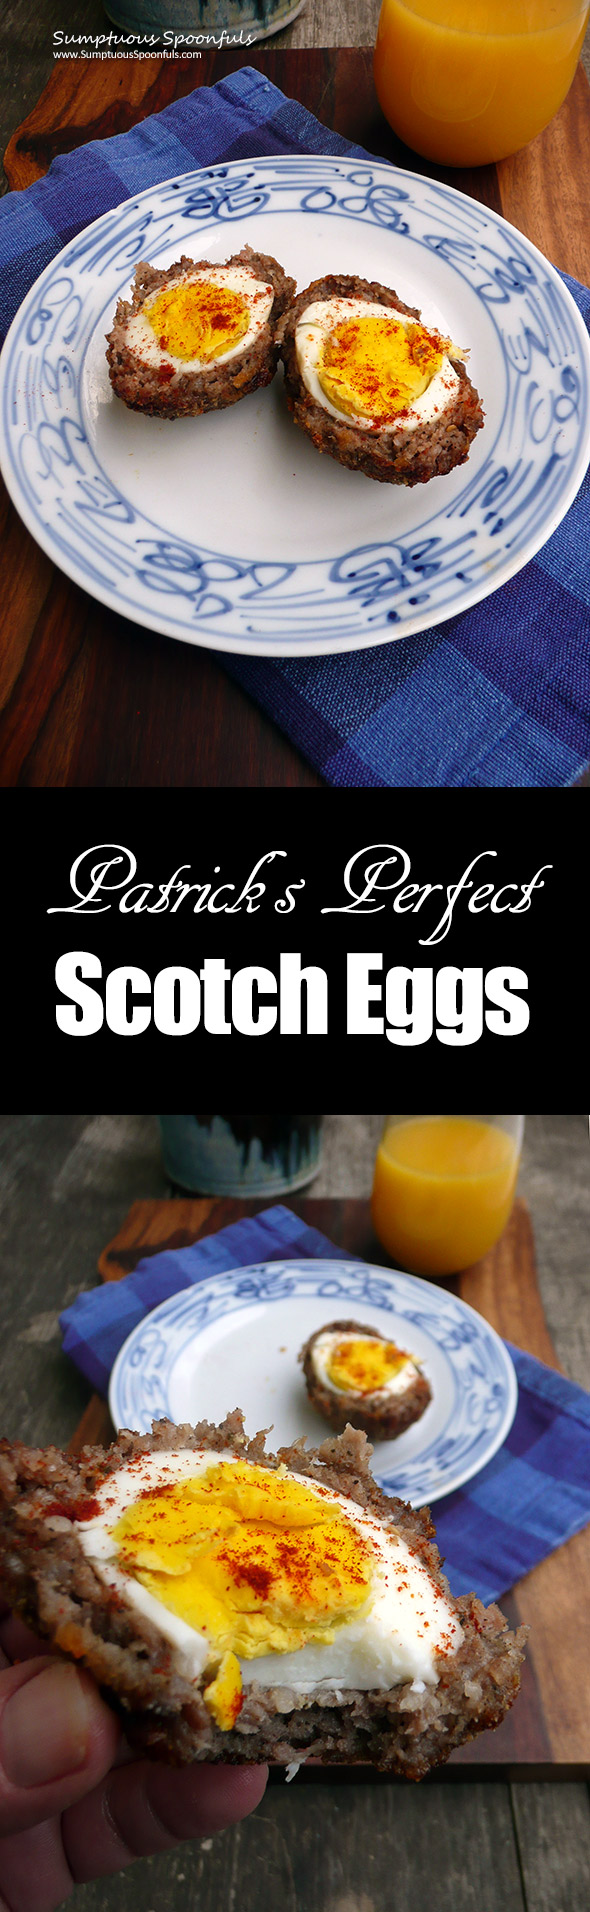 Patrick's Perfect Scotch Eggs ~ Sumptuous Spoonfuls #sausage #egg #recipe #tribute